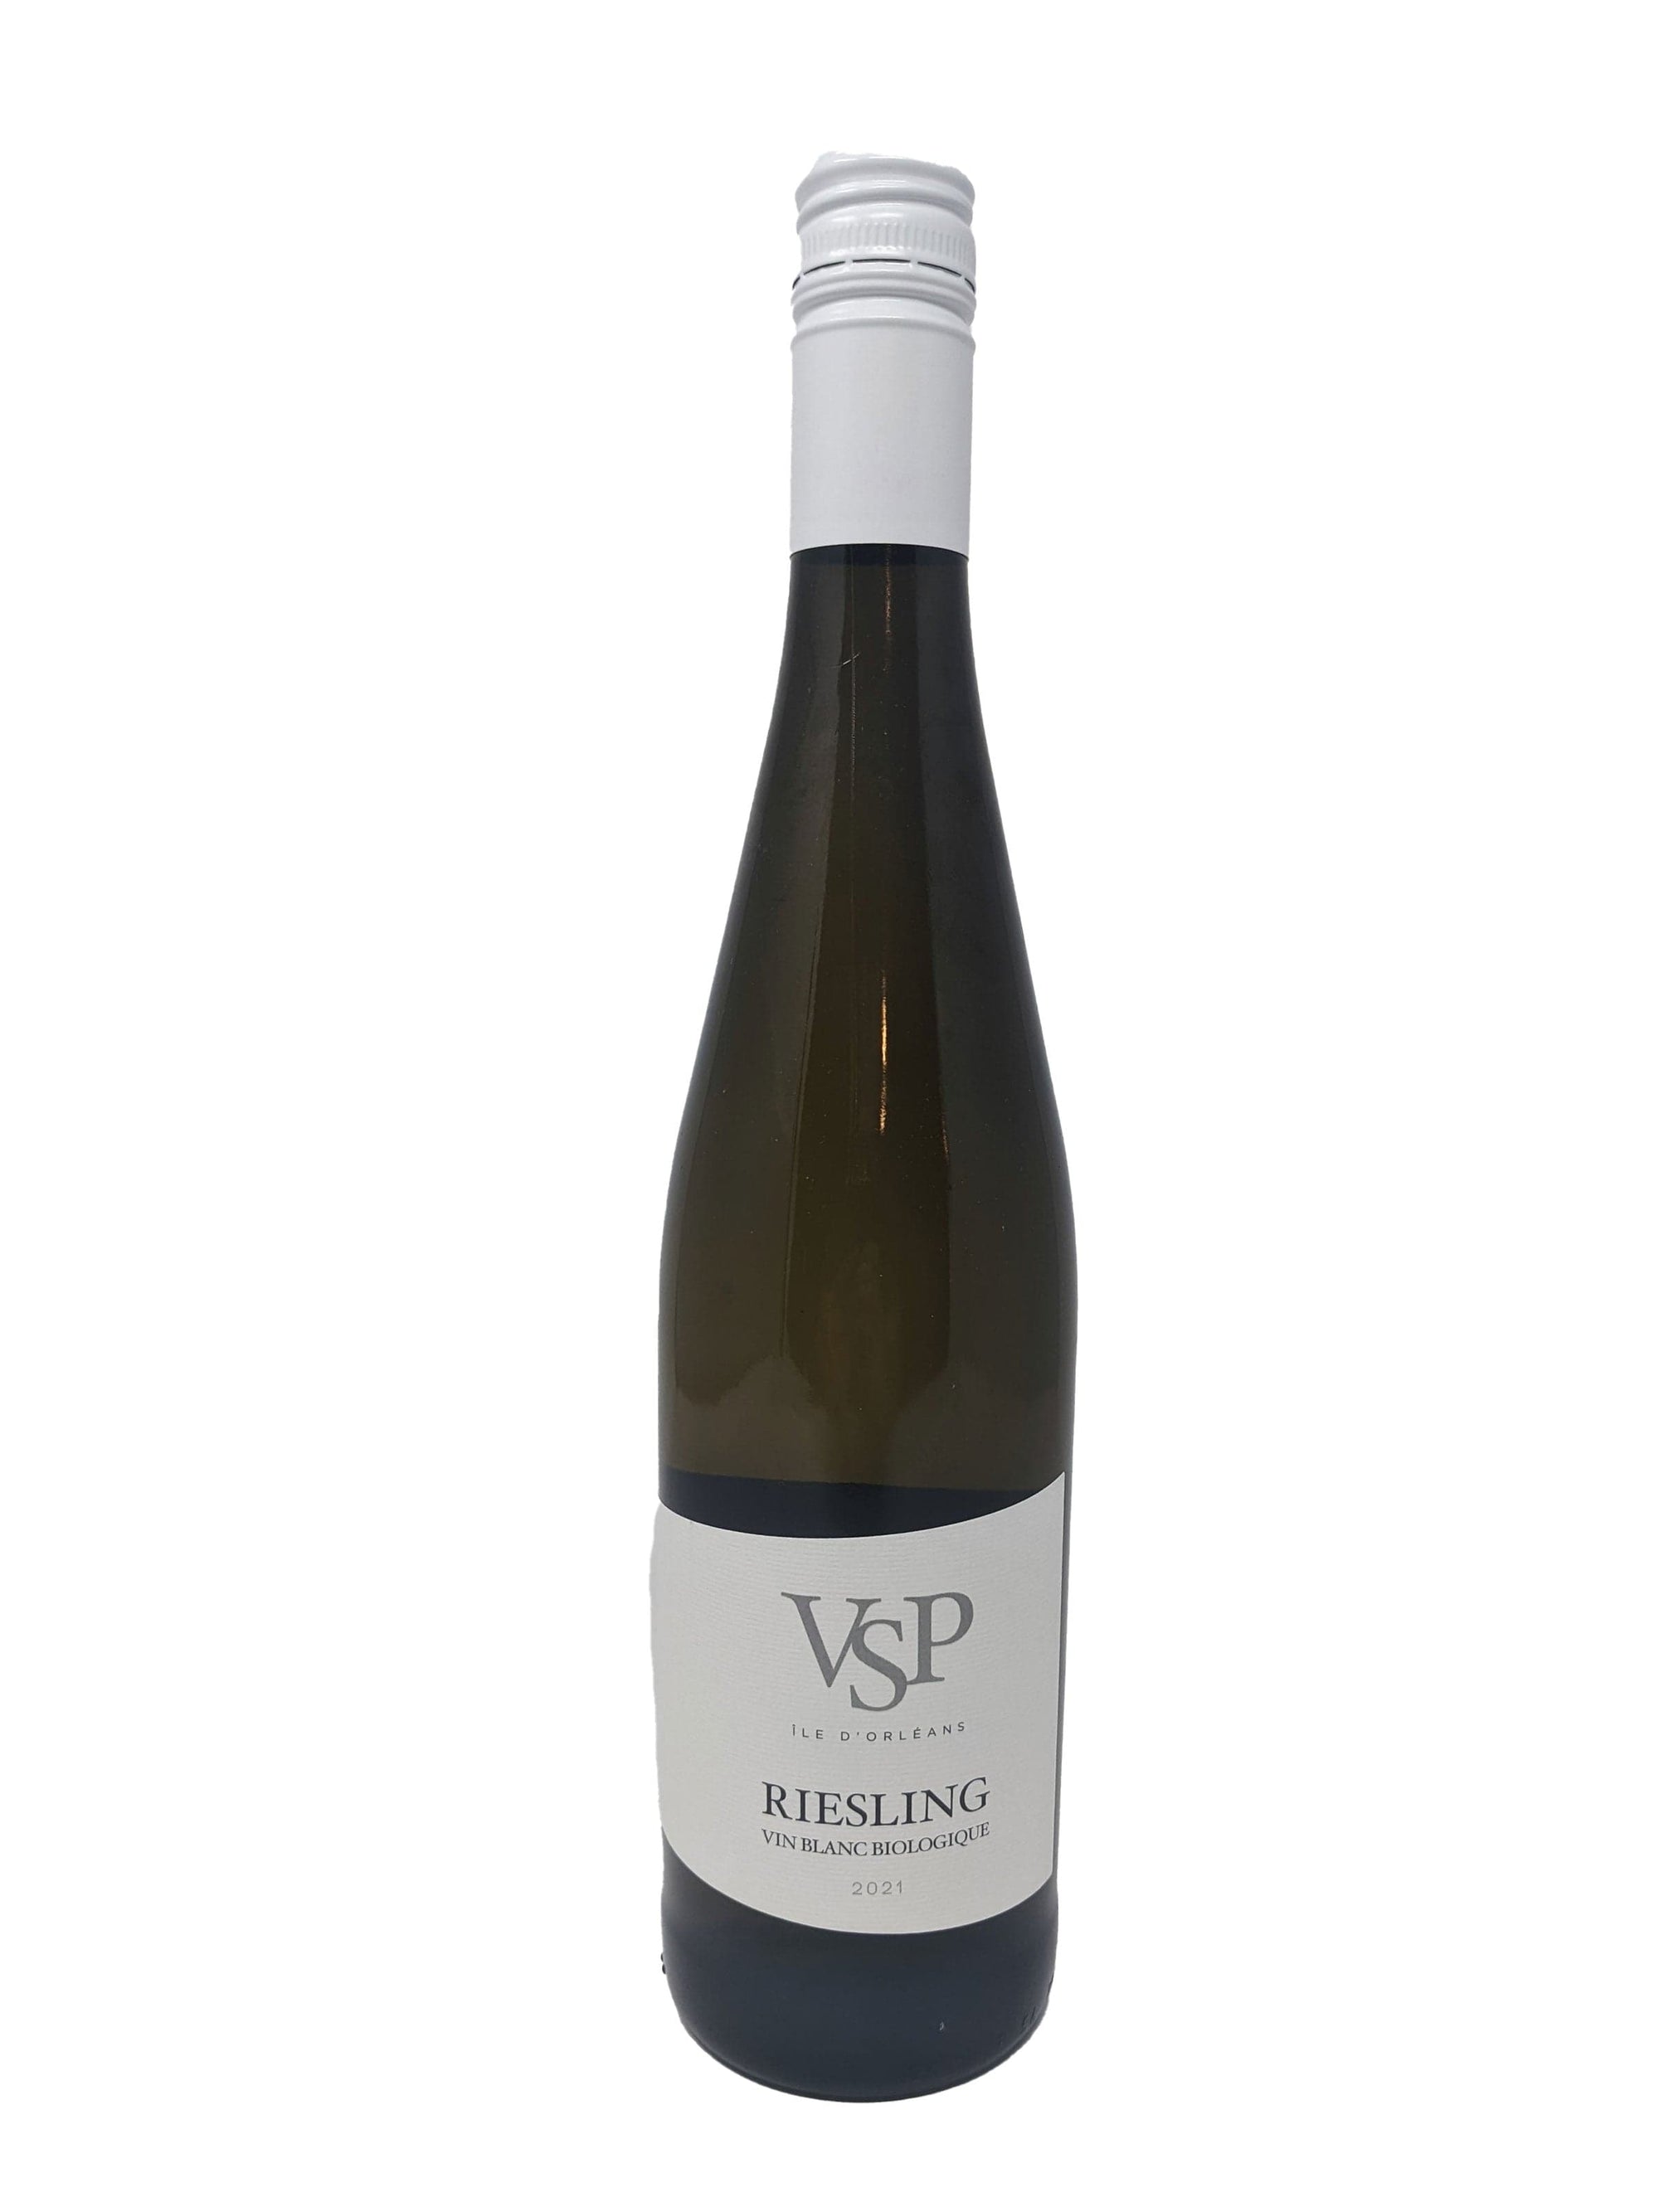 Vignoble Ste-Pétronille vin Riesling - Vin blanc du Vignoble Ste-Pétronille